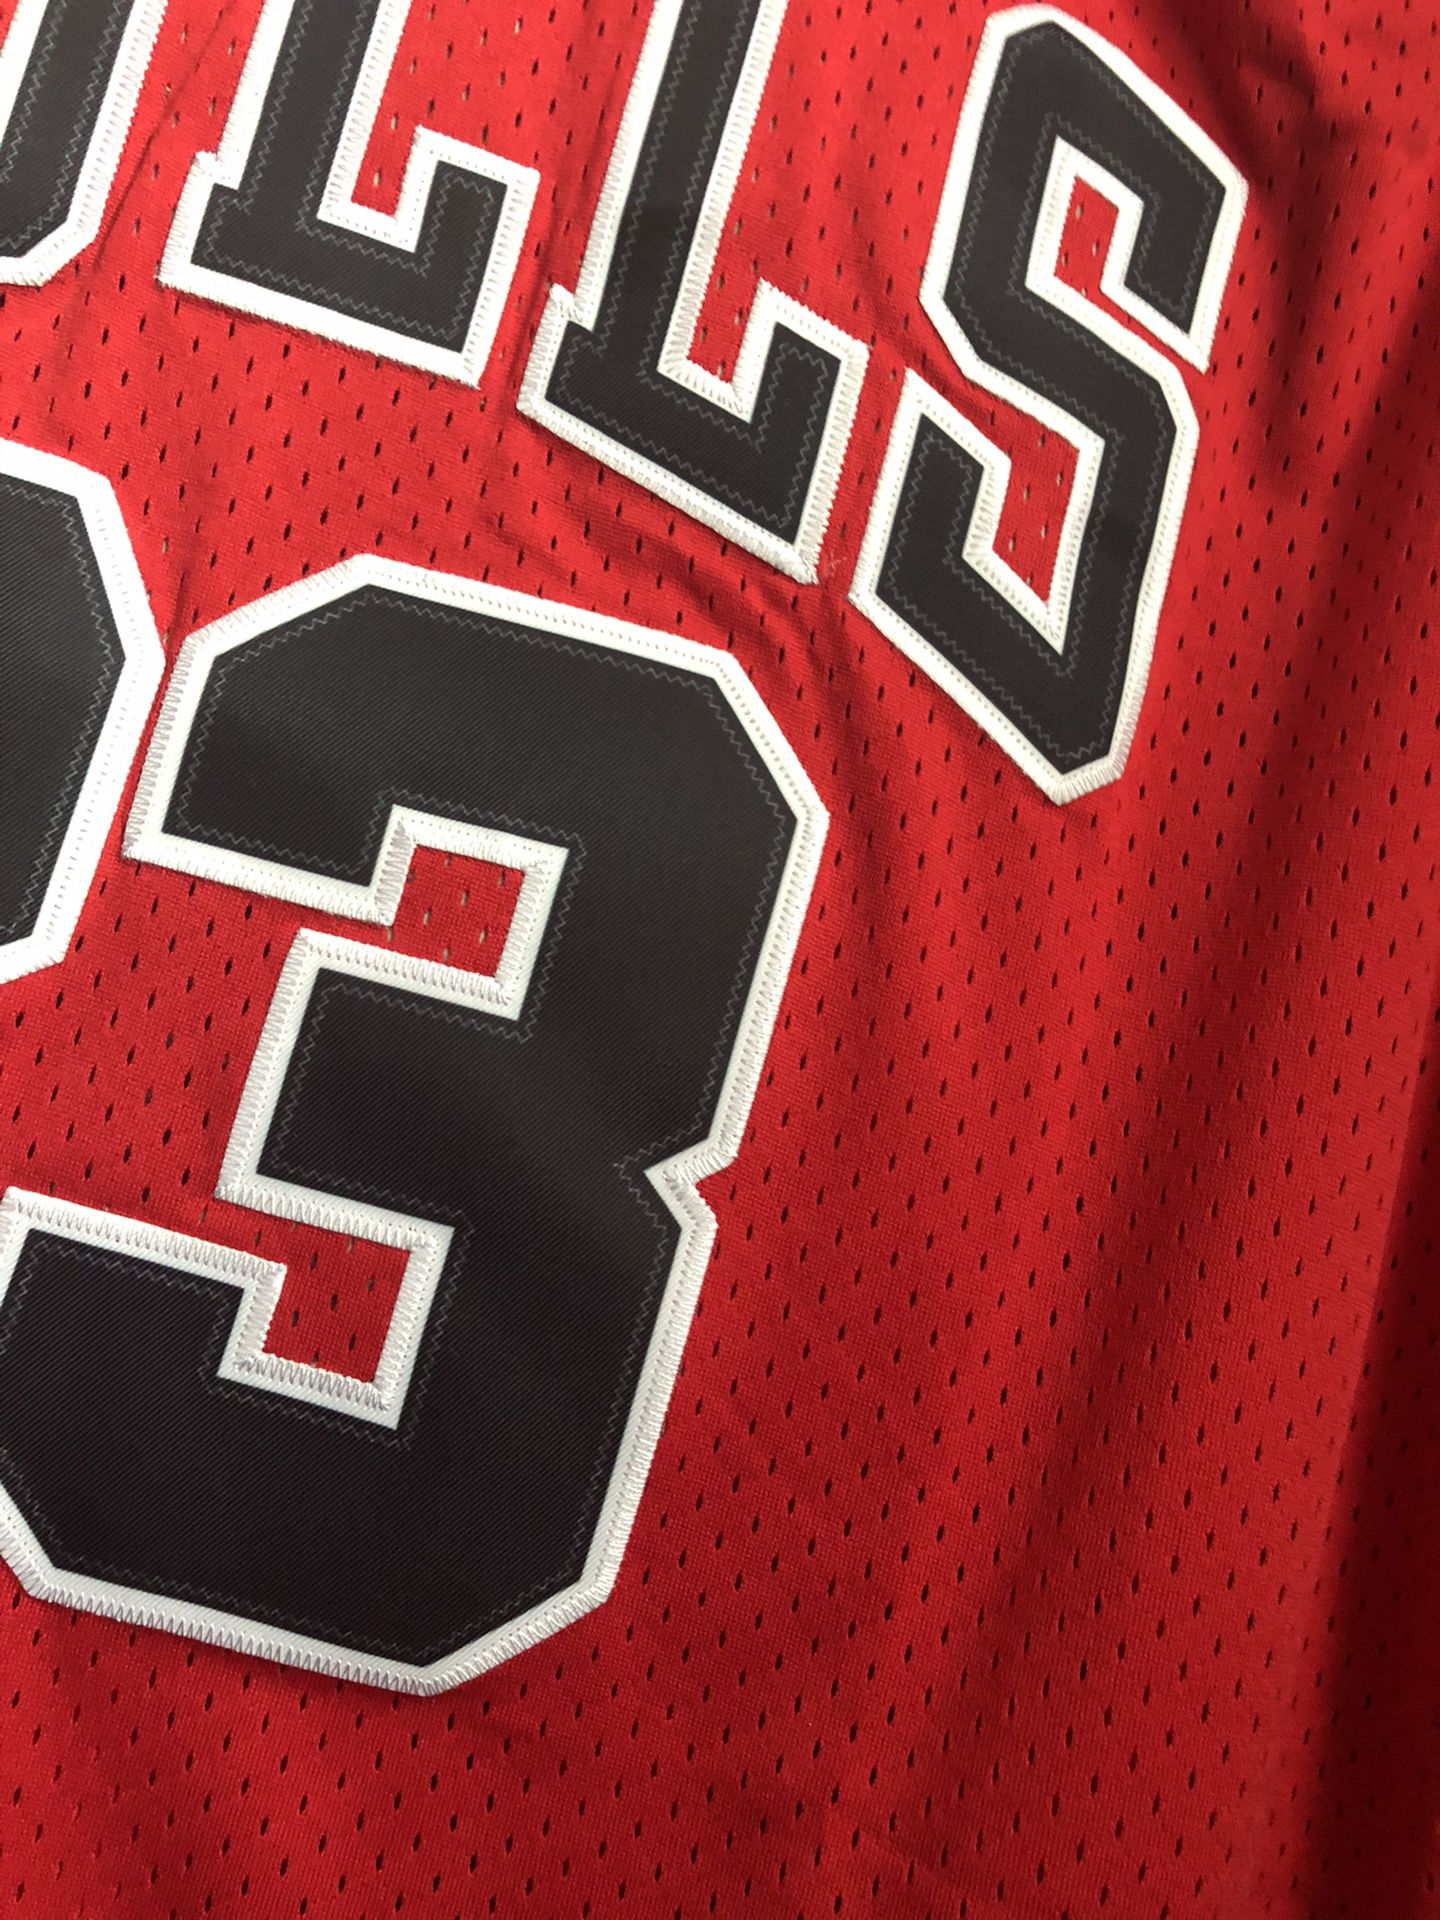 Vintage Michael Jordan “Chicago Bulls” Nike Jersey